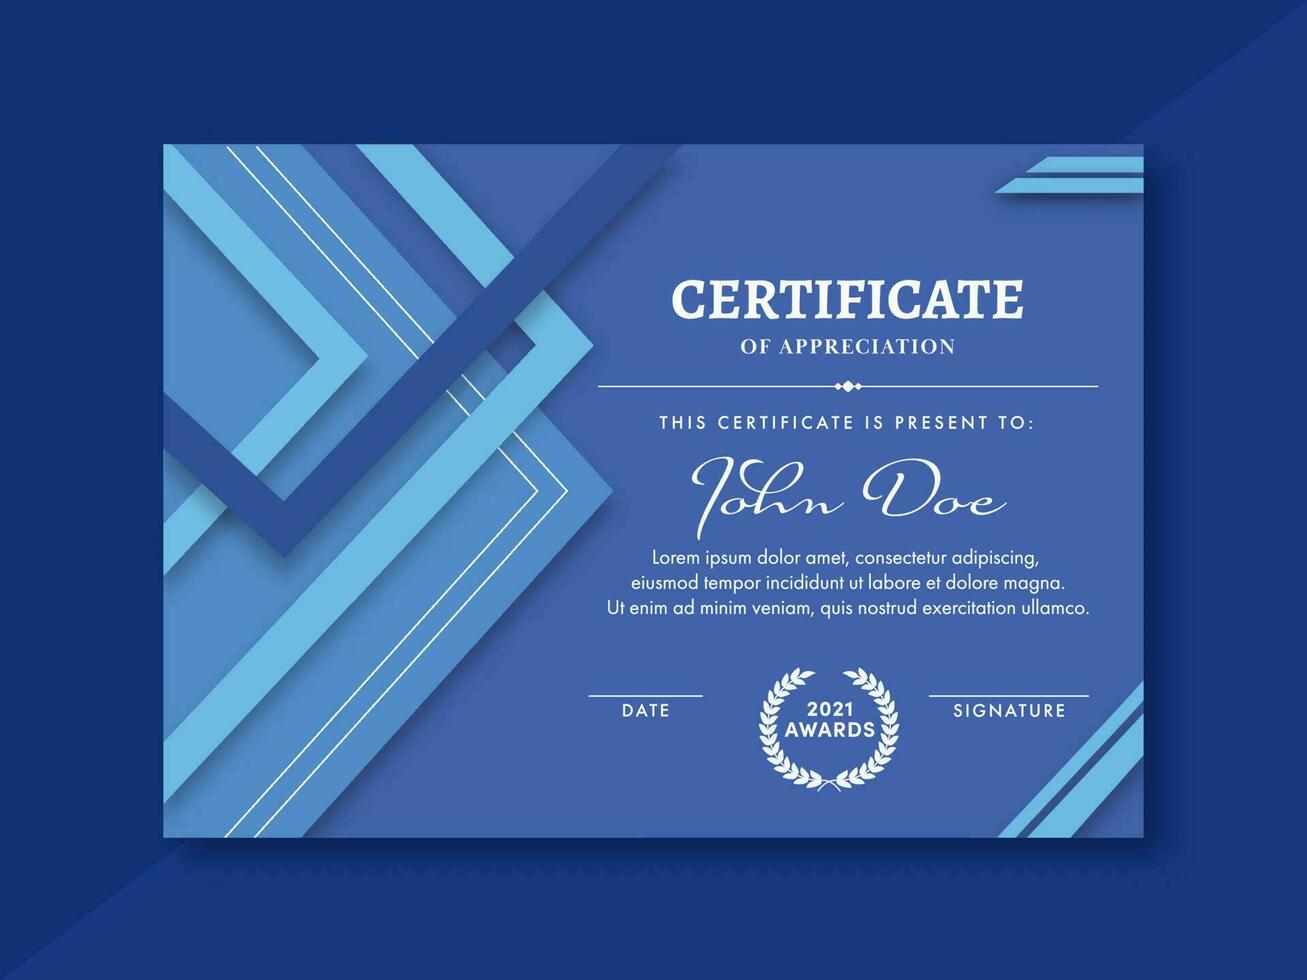 Certificate Of Appreciation Template Design in Blue Color. vector